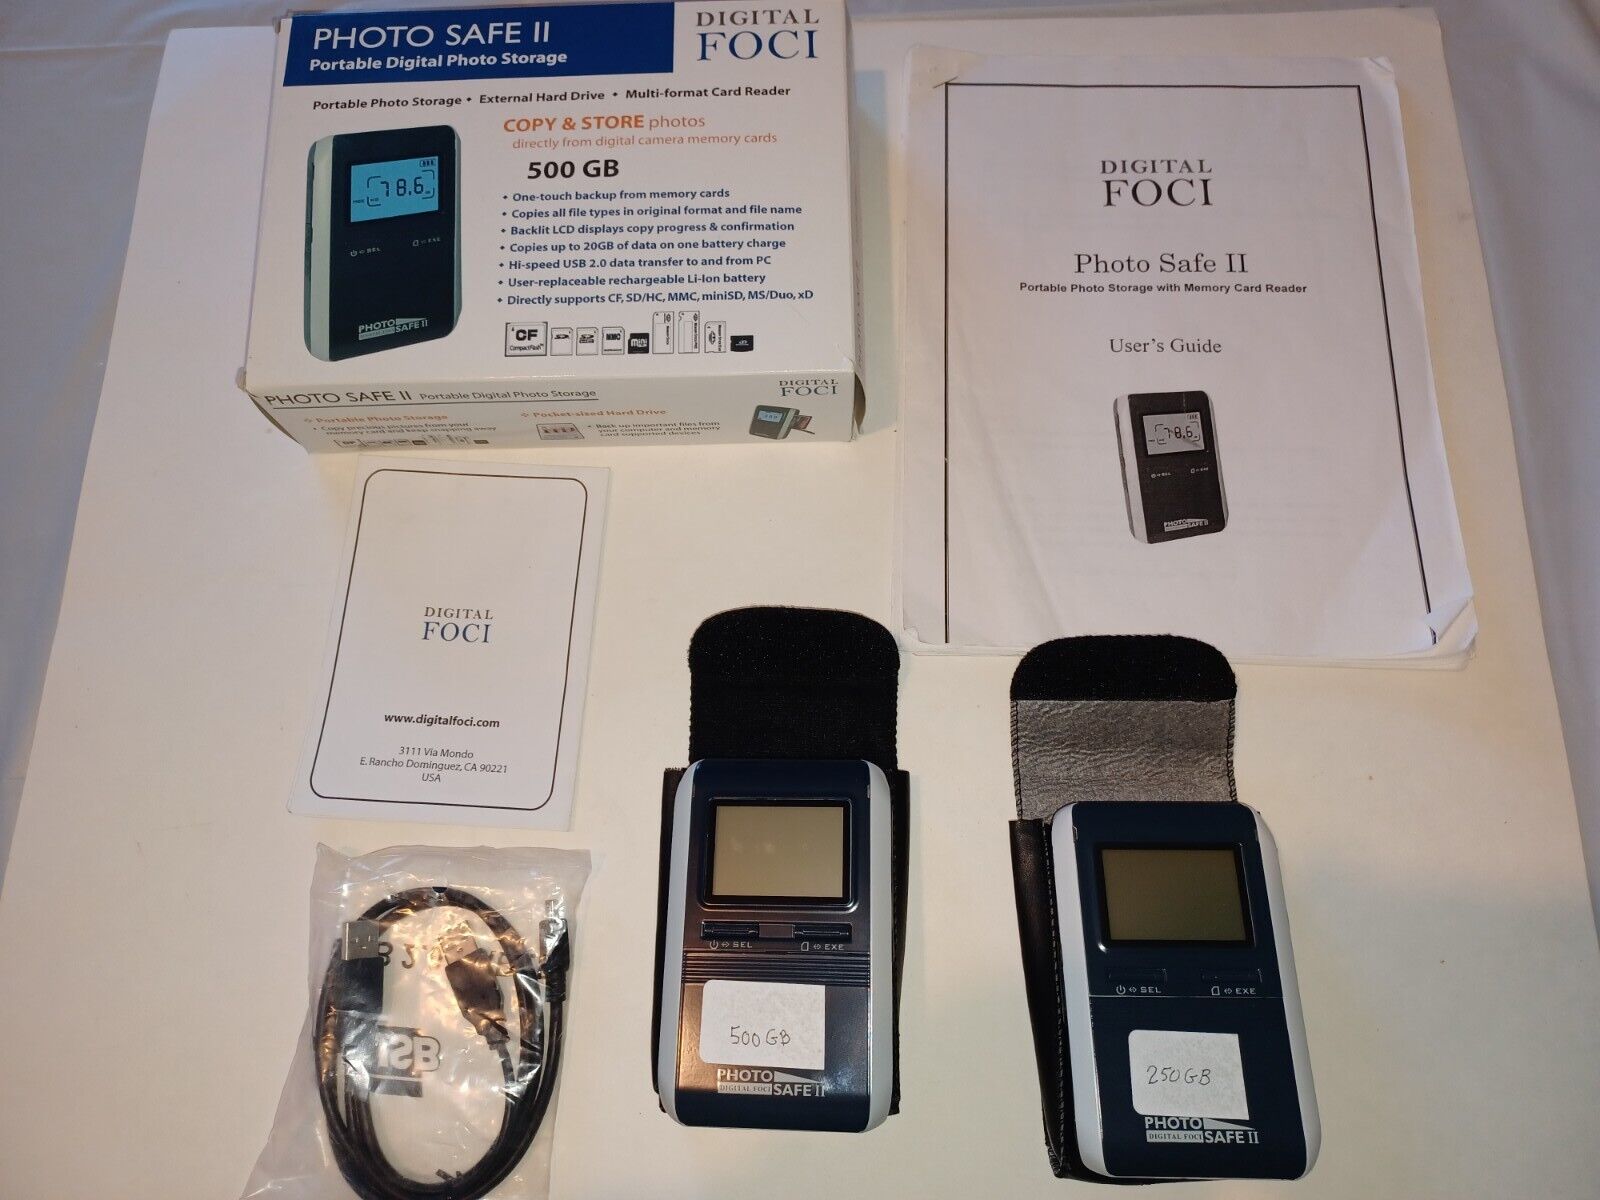 Digital Foci Set Of 2 External Hard Drives 500 GB And 25 - USB 2.0 